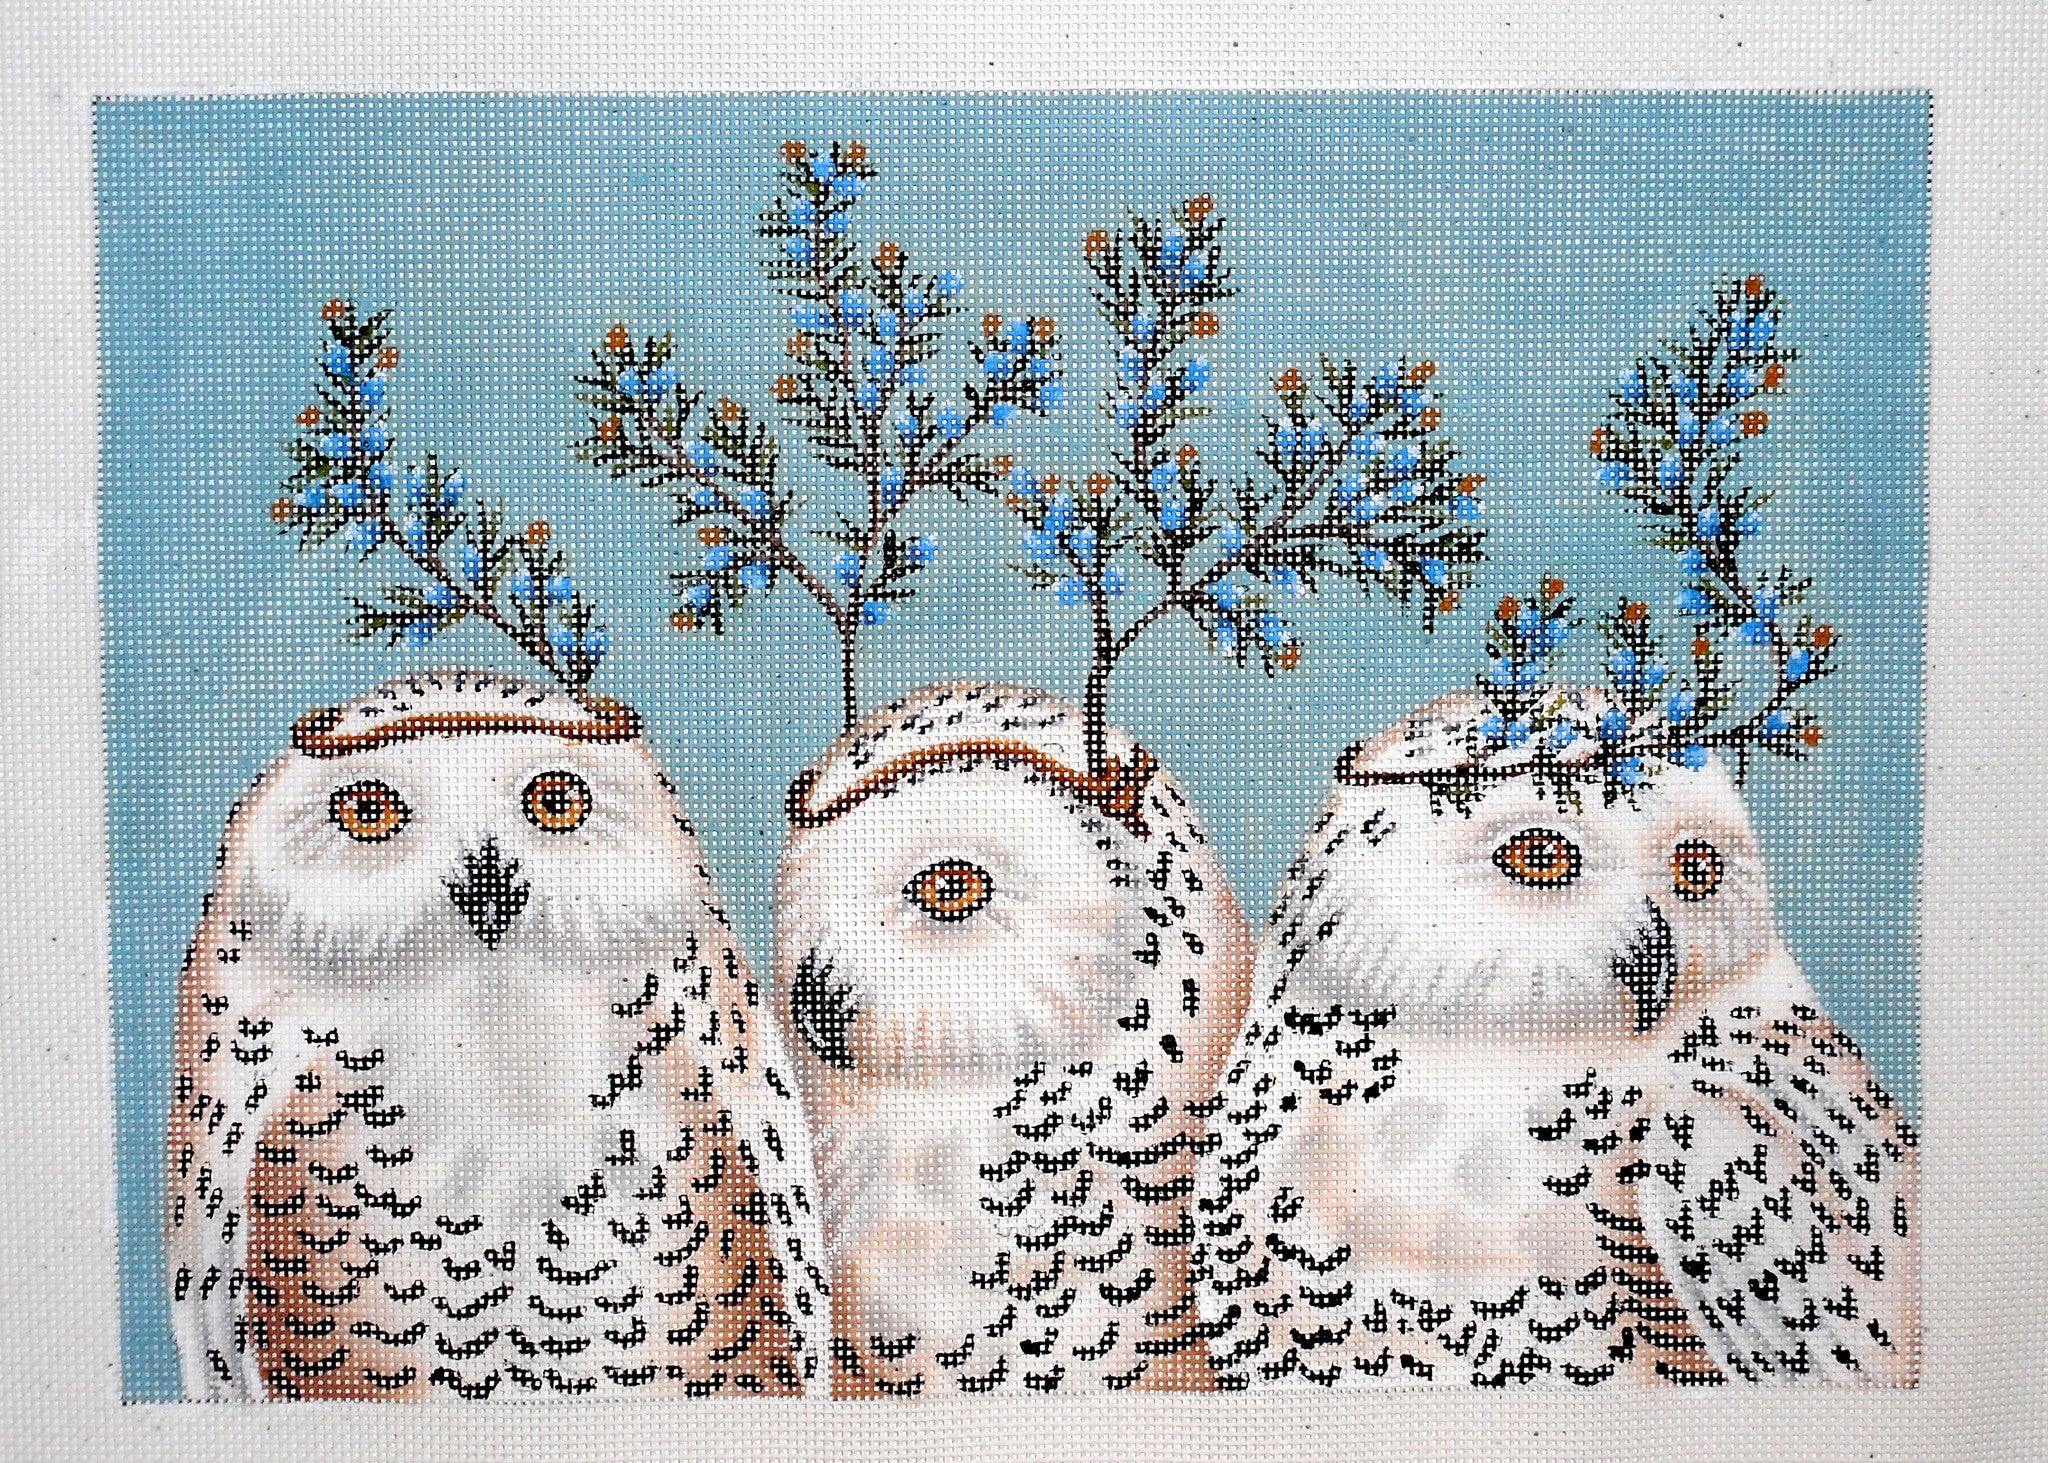 Festive Owls - The Flying Needles